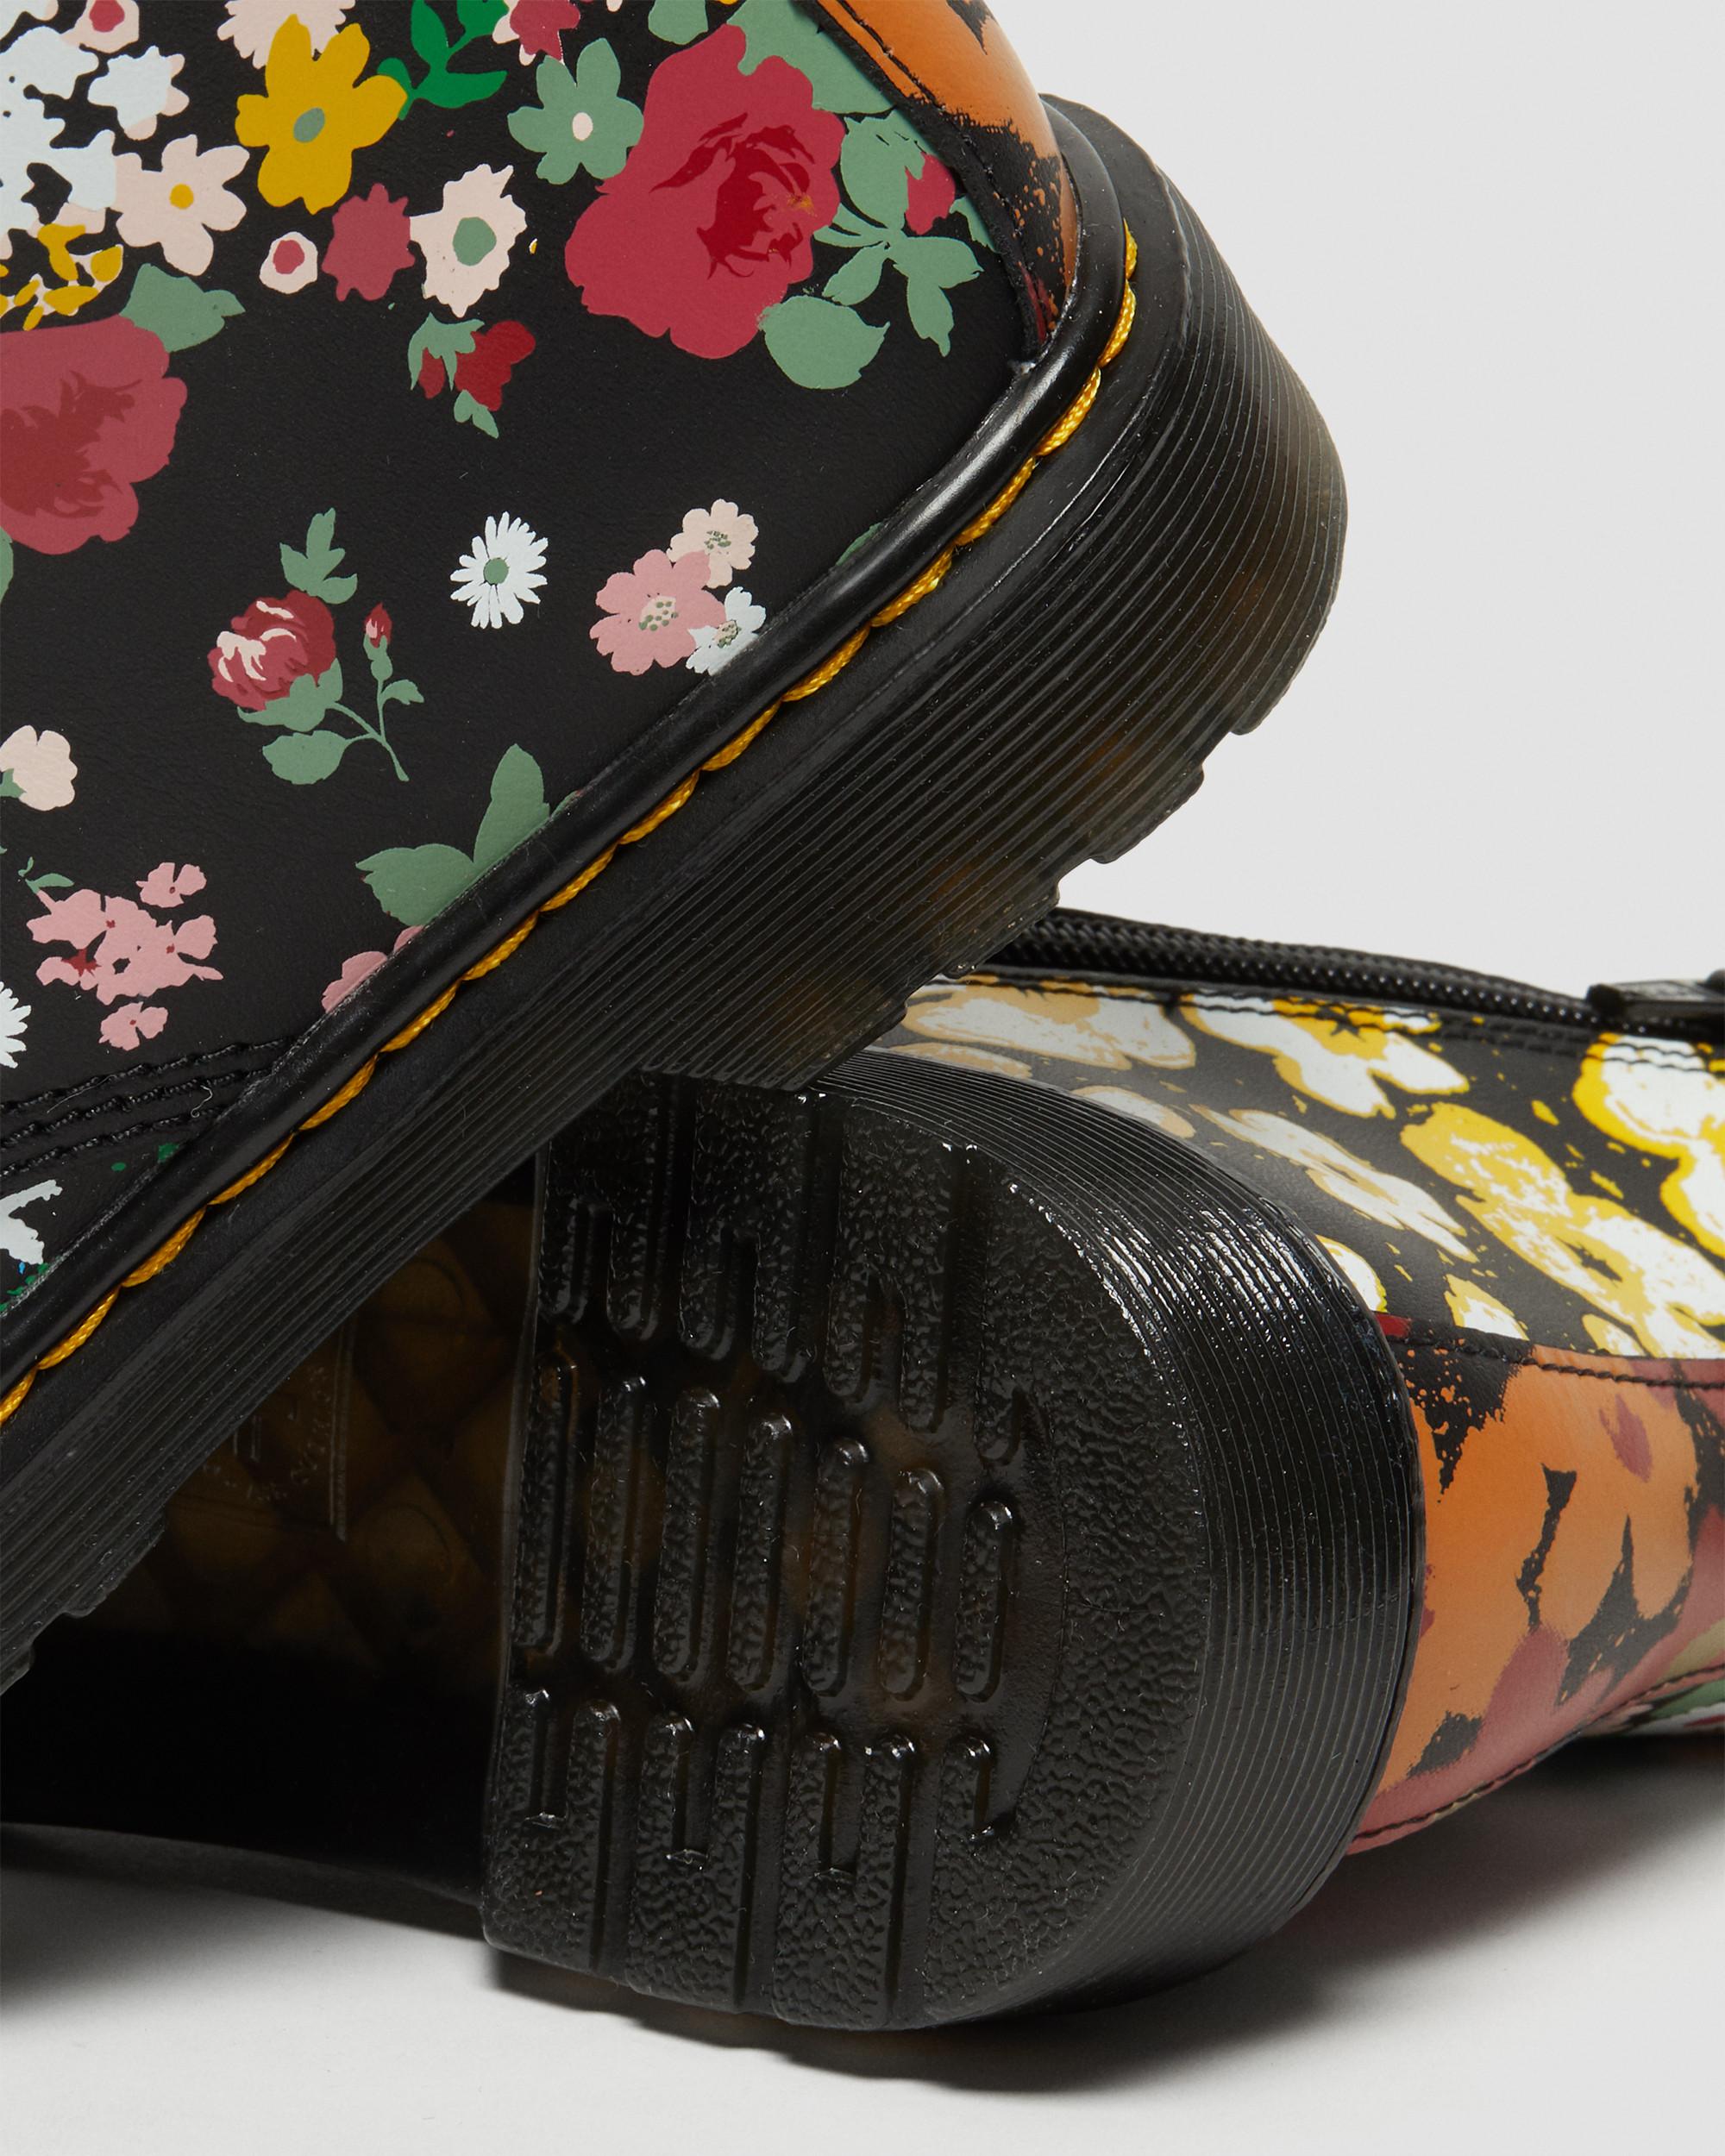 | Up Dr. Lace Floral Boots in Black Mash Martens Up Junior 1460 Leather